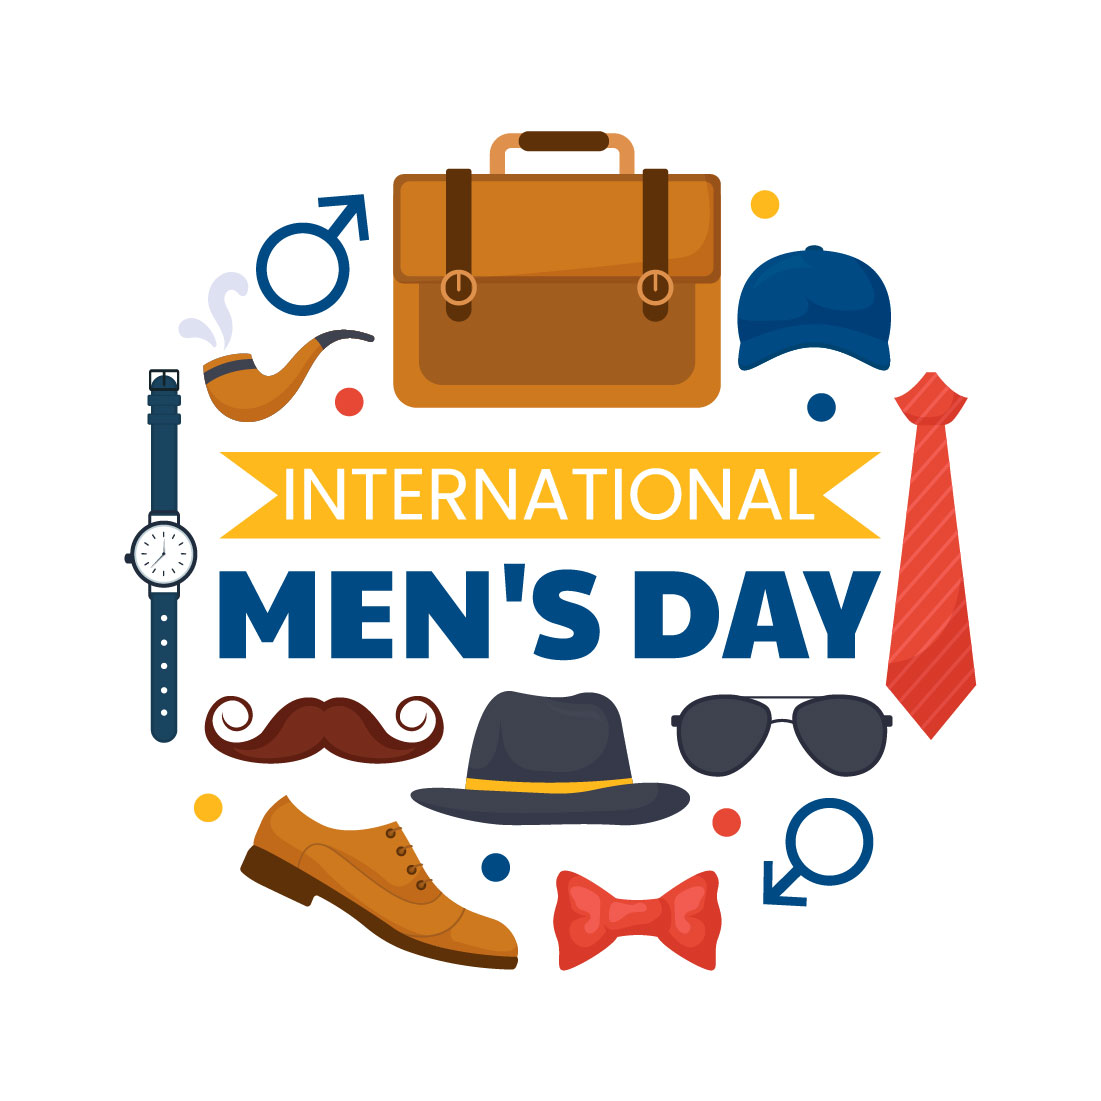 13 International Men's Day Illustration preview image.